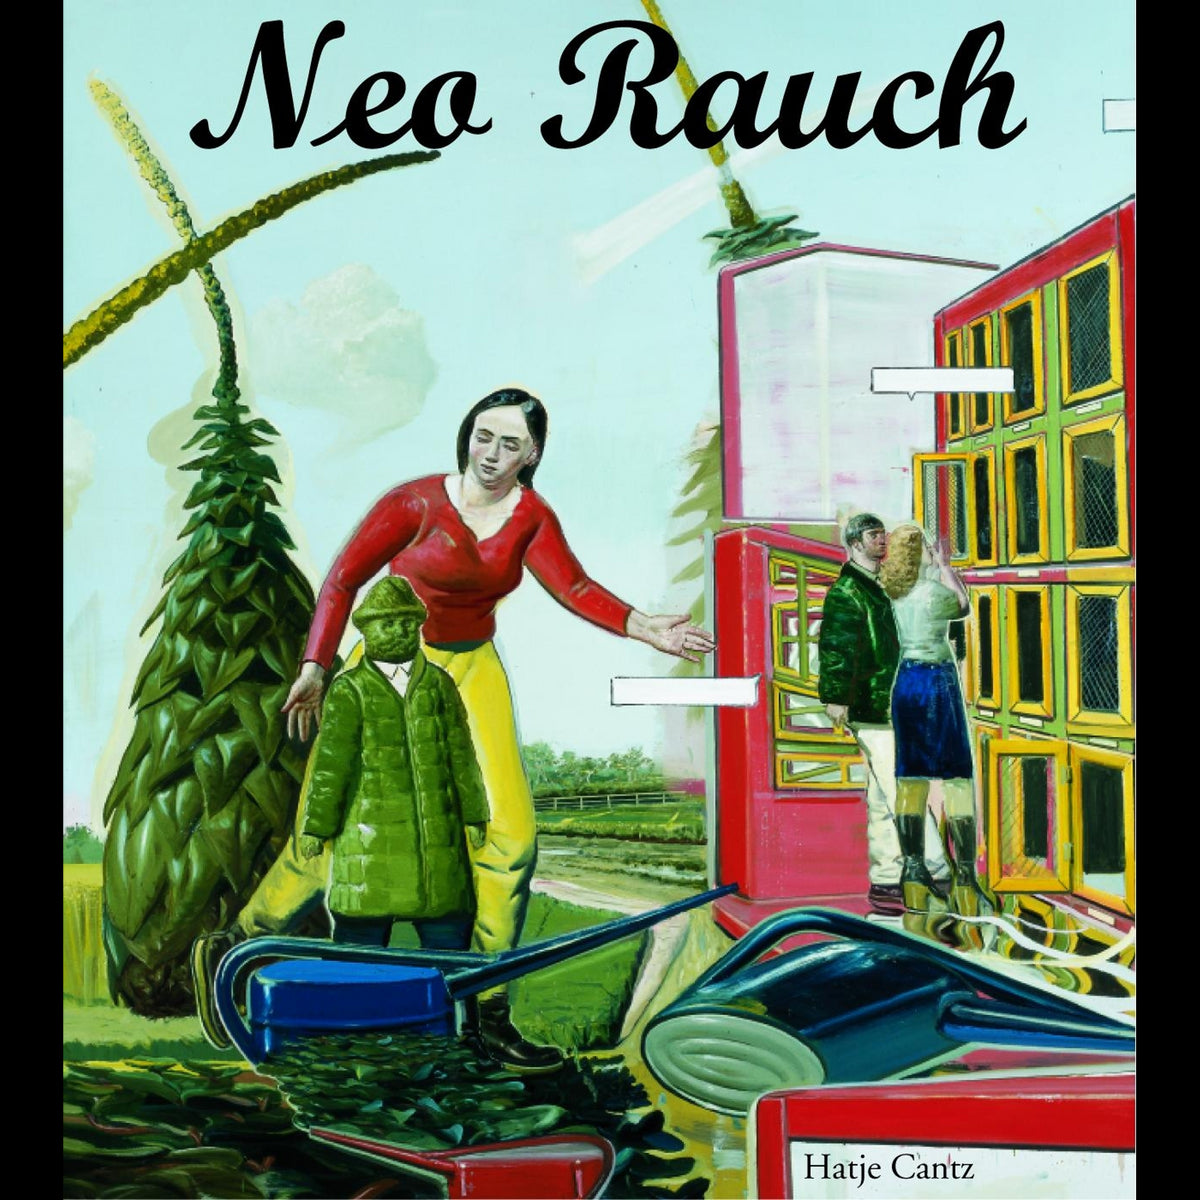 Coverbild Neo Rauch